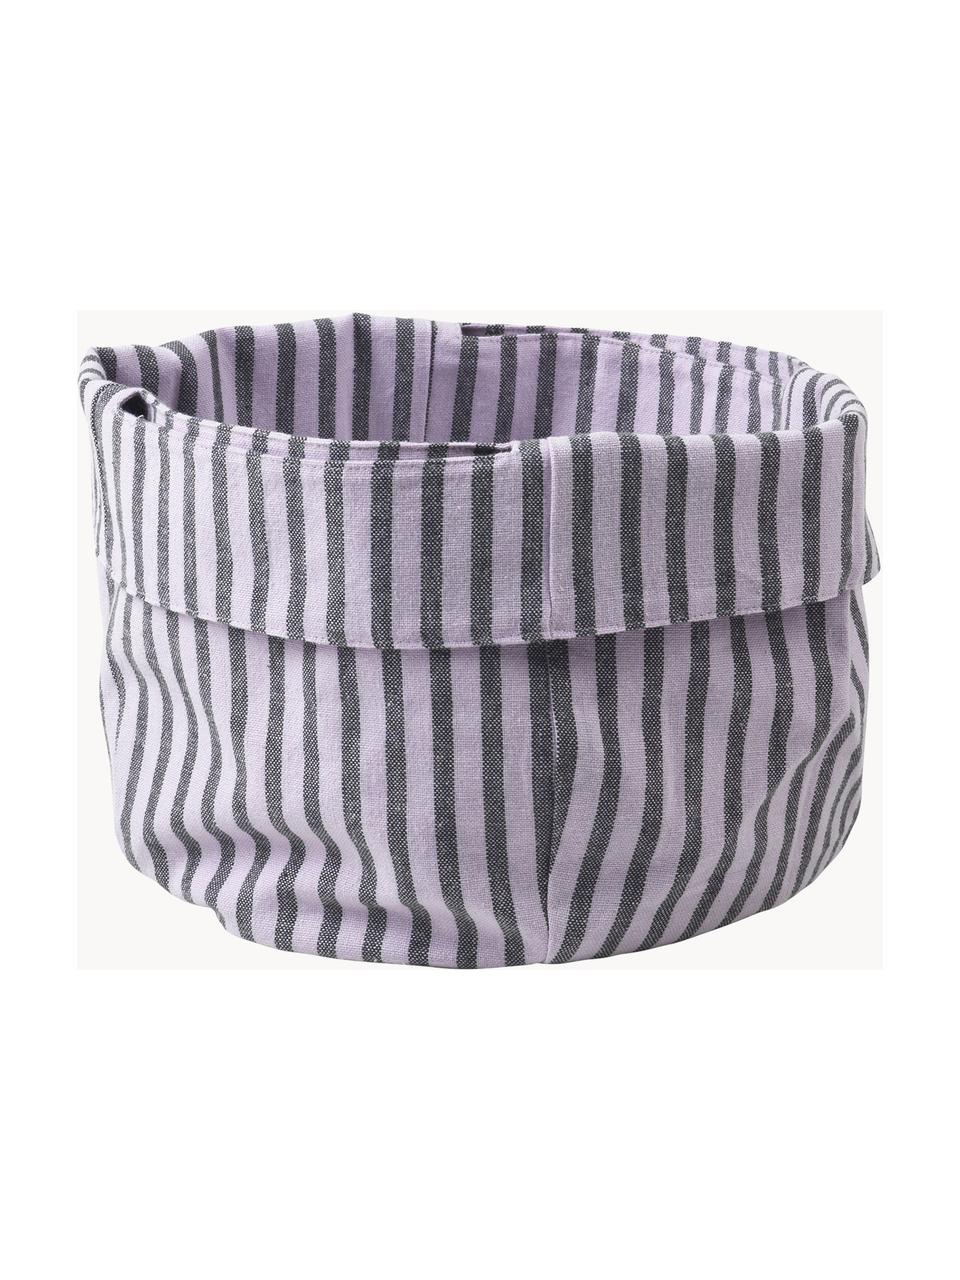 Bolsa del pan a rayas de algodón Strips, 100% algodón, Gris, lila, Ø 22 x Al 22 cm